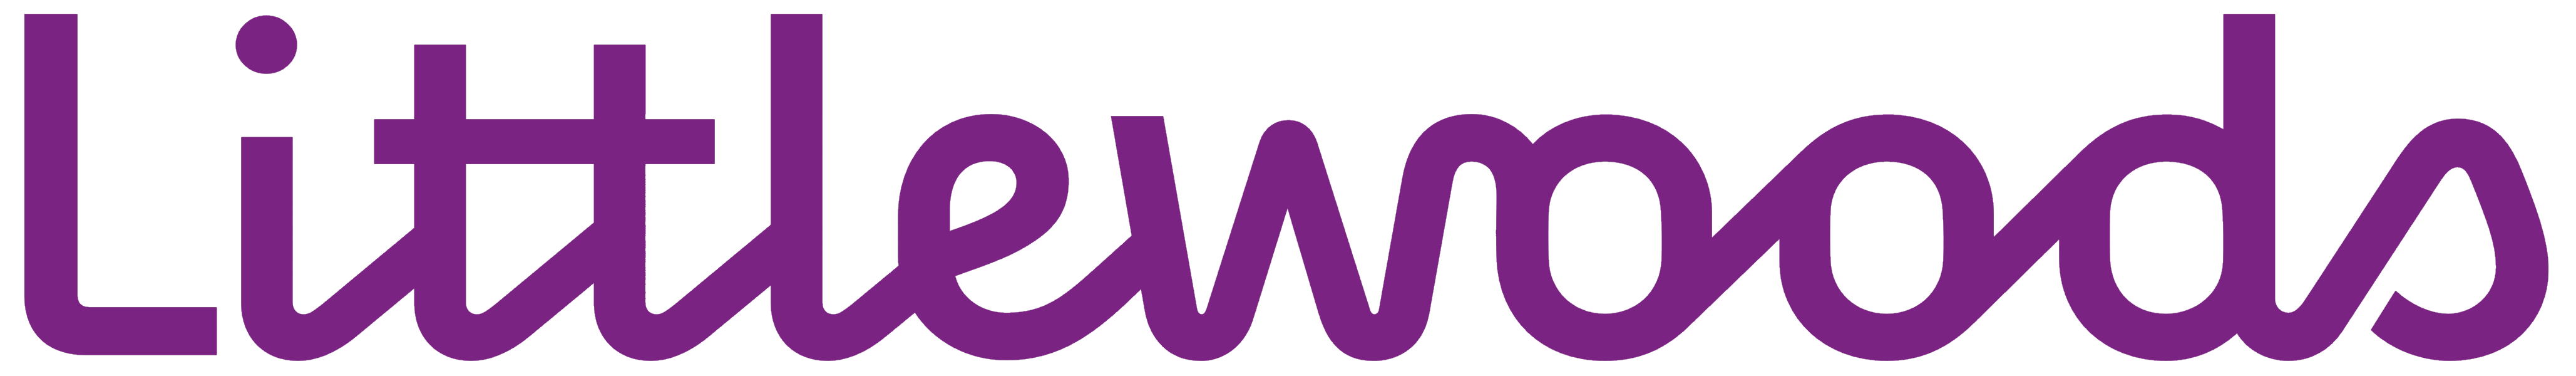 Littlewoods logo, logotype